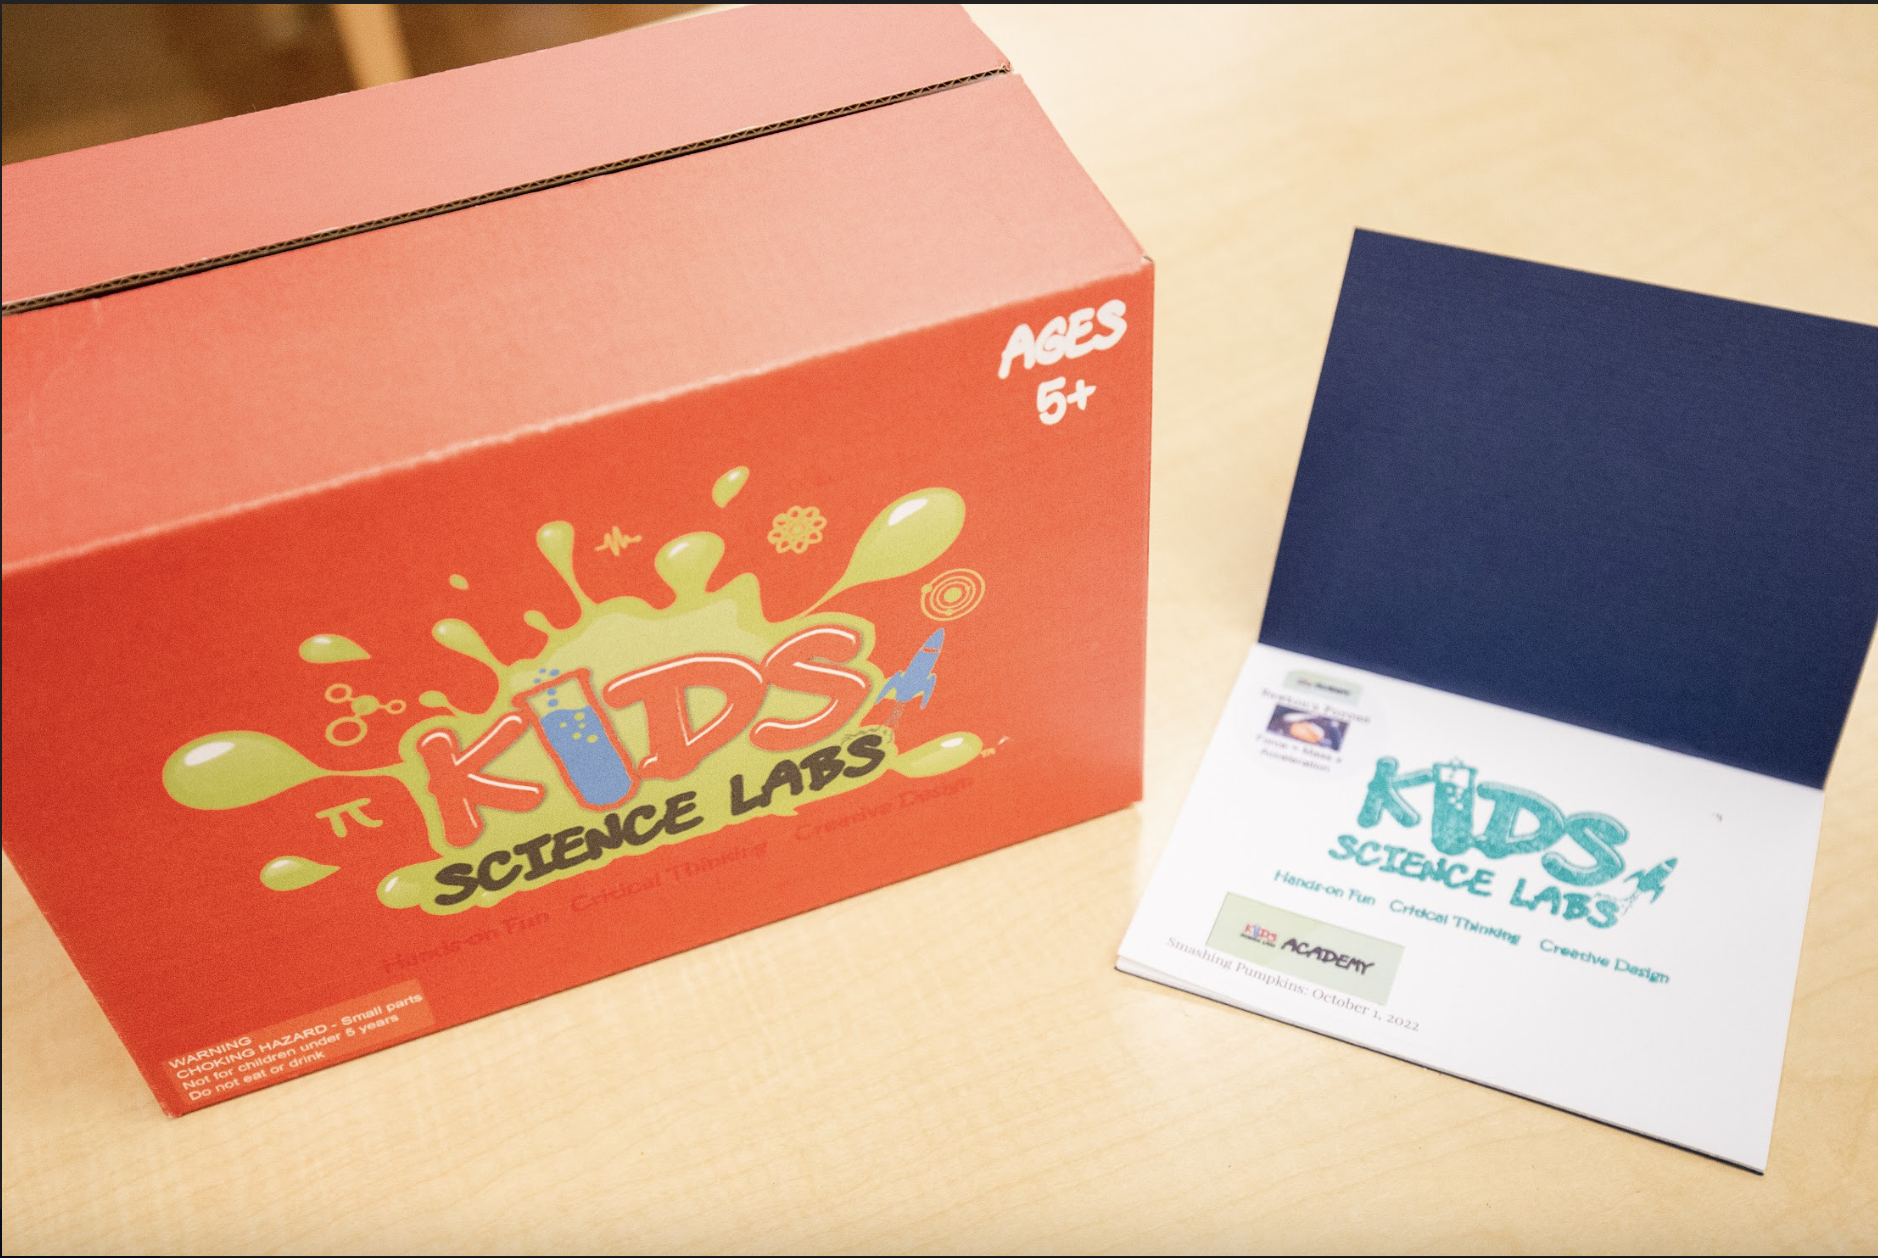 KSL Academy Innovation Box and Passport.png